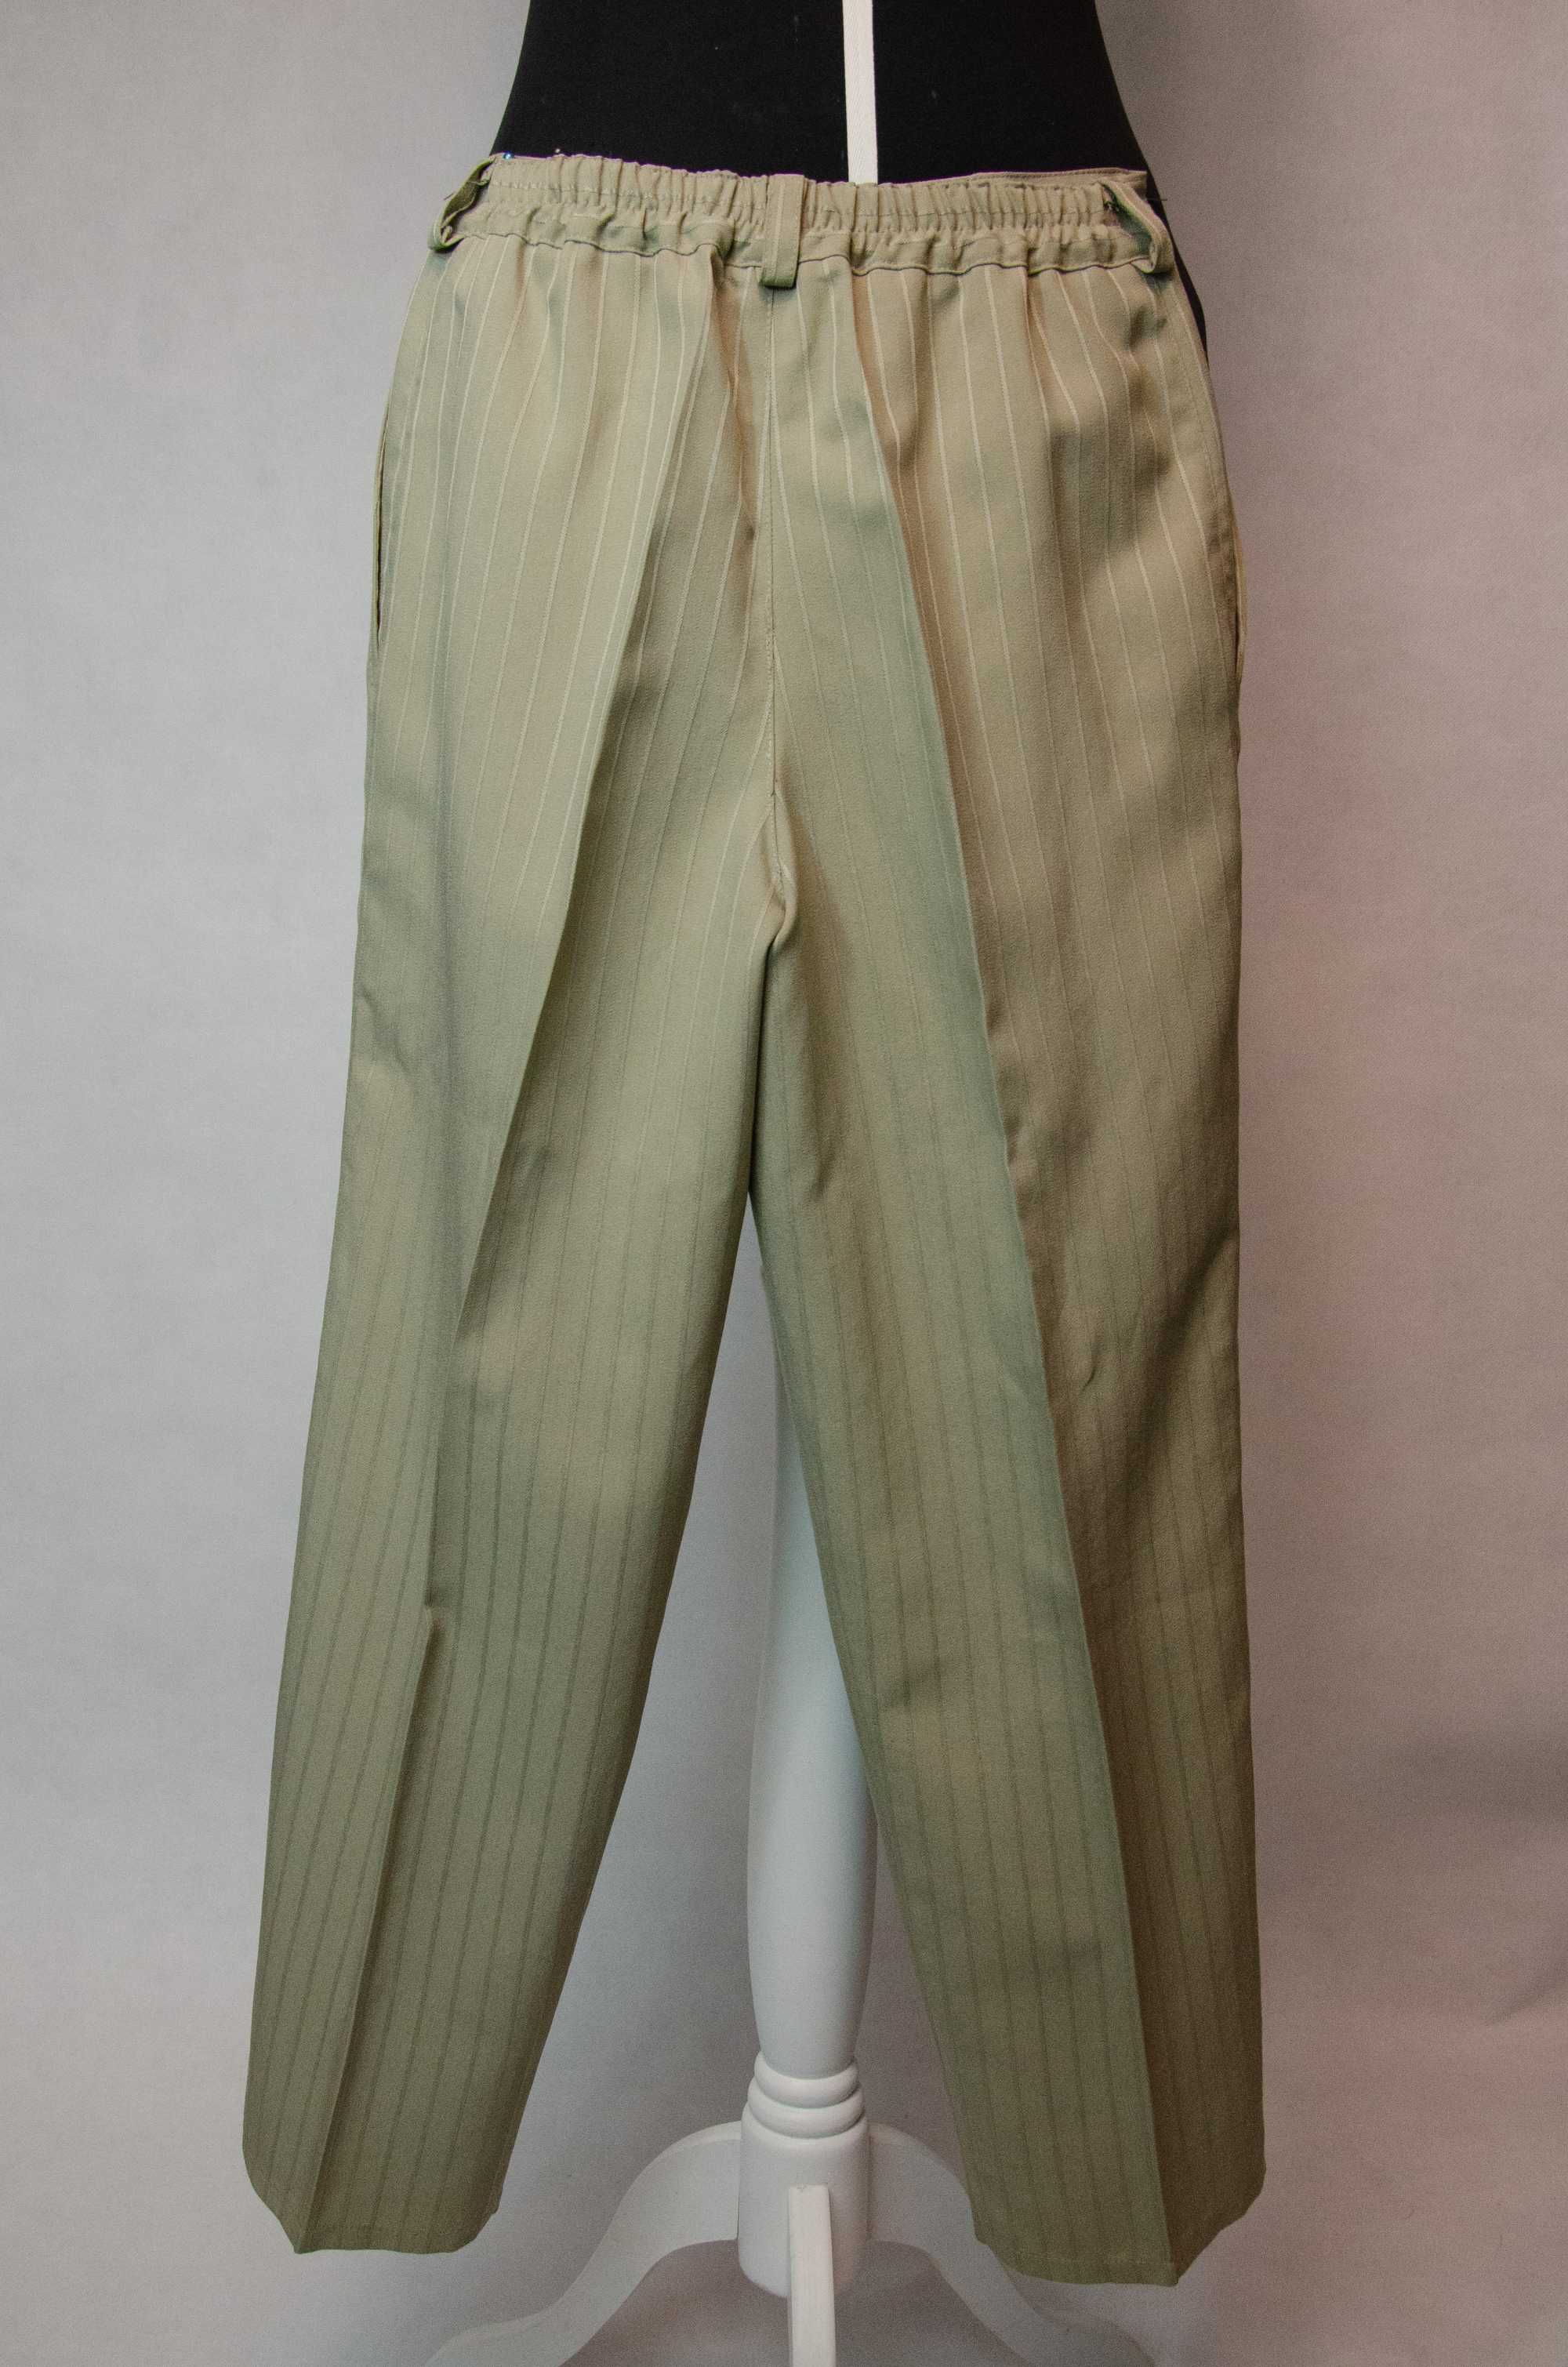 kamizelka i spodnie eleganckie 146cm